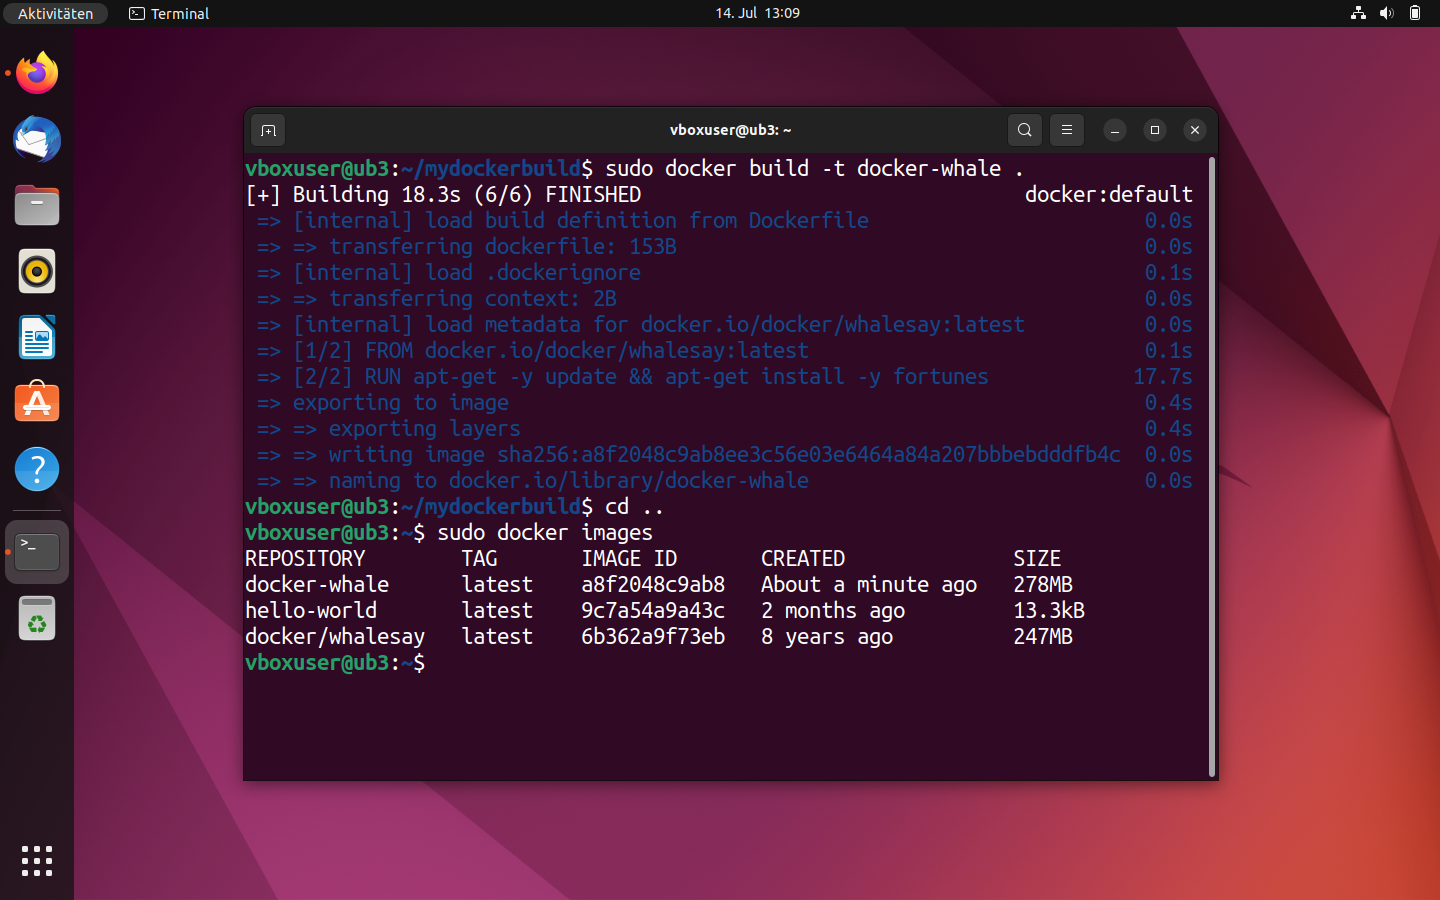 Ubuntu-Termal: Übersicht aller Images